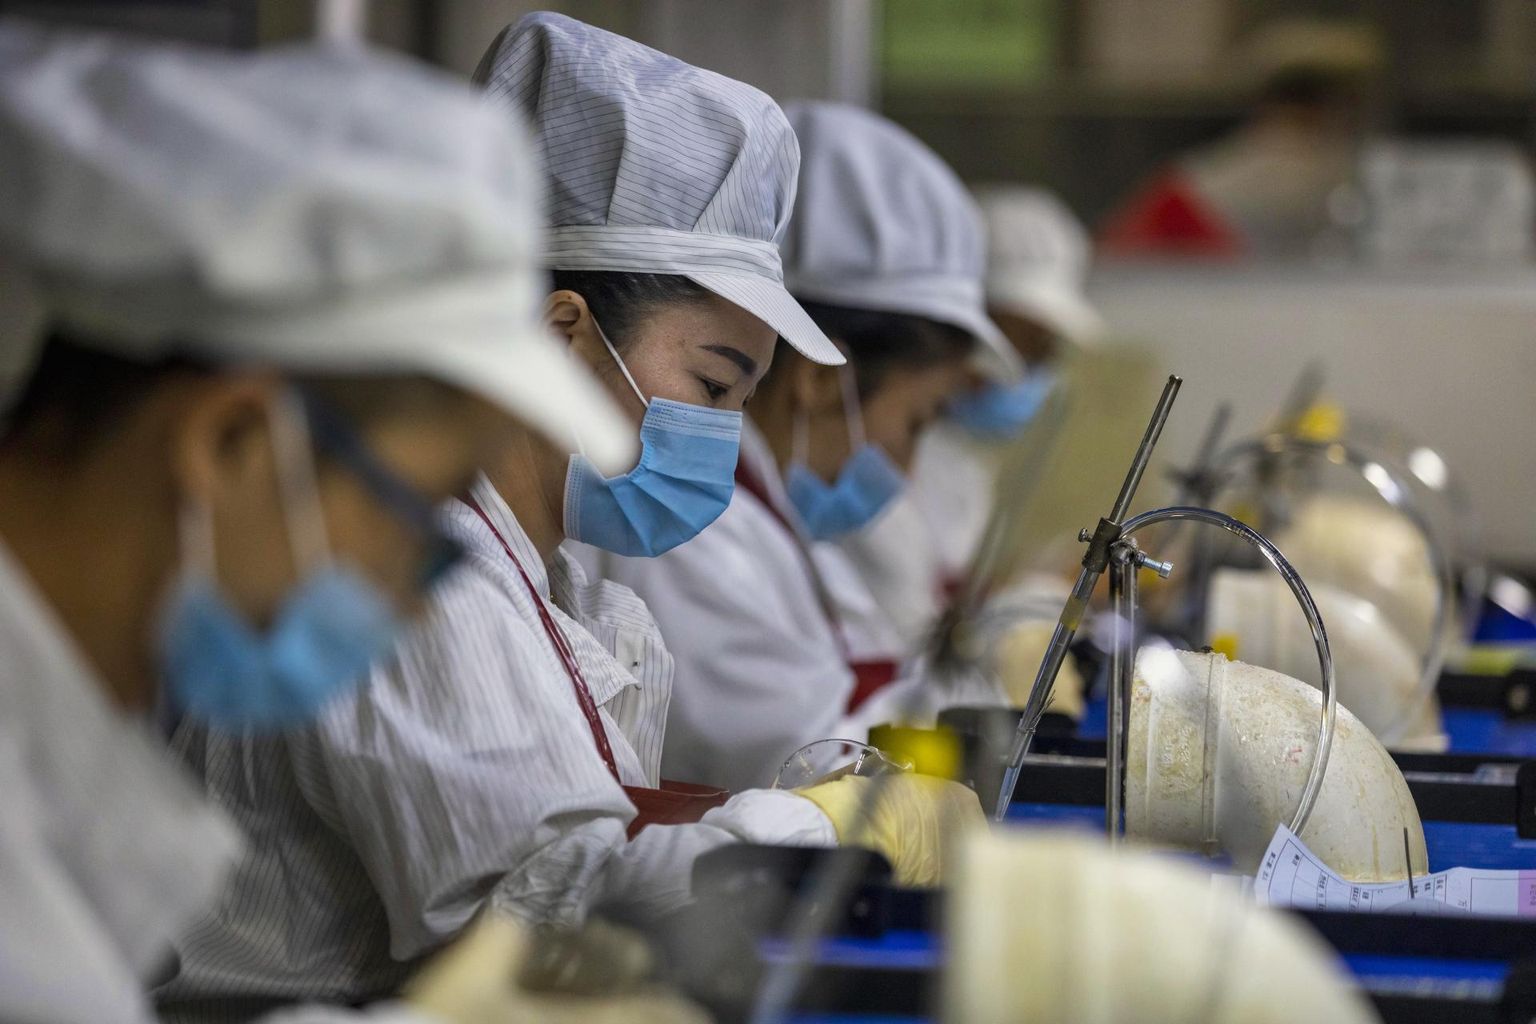 Hiina töölised valmistamas Jiangsu provintsis Zhenjiang asuvas Wanxini tehases otilisi läätsi.